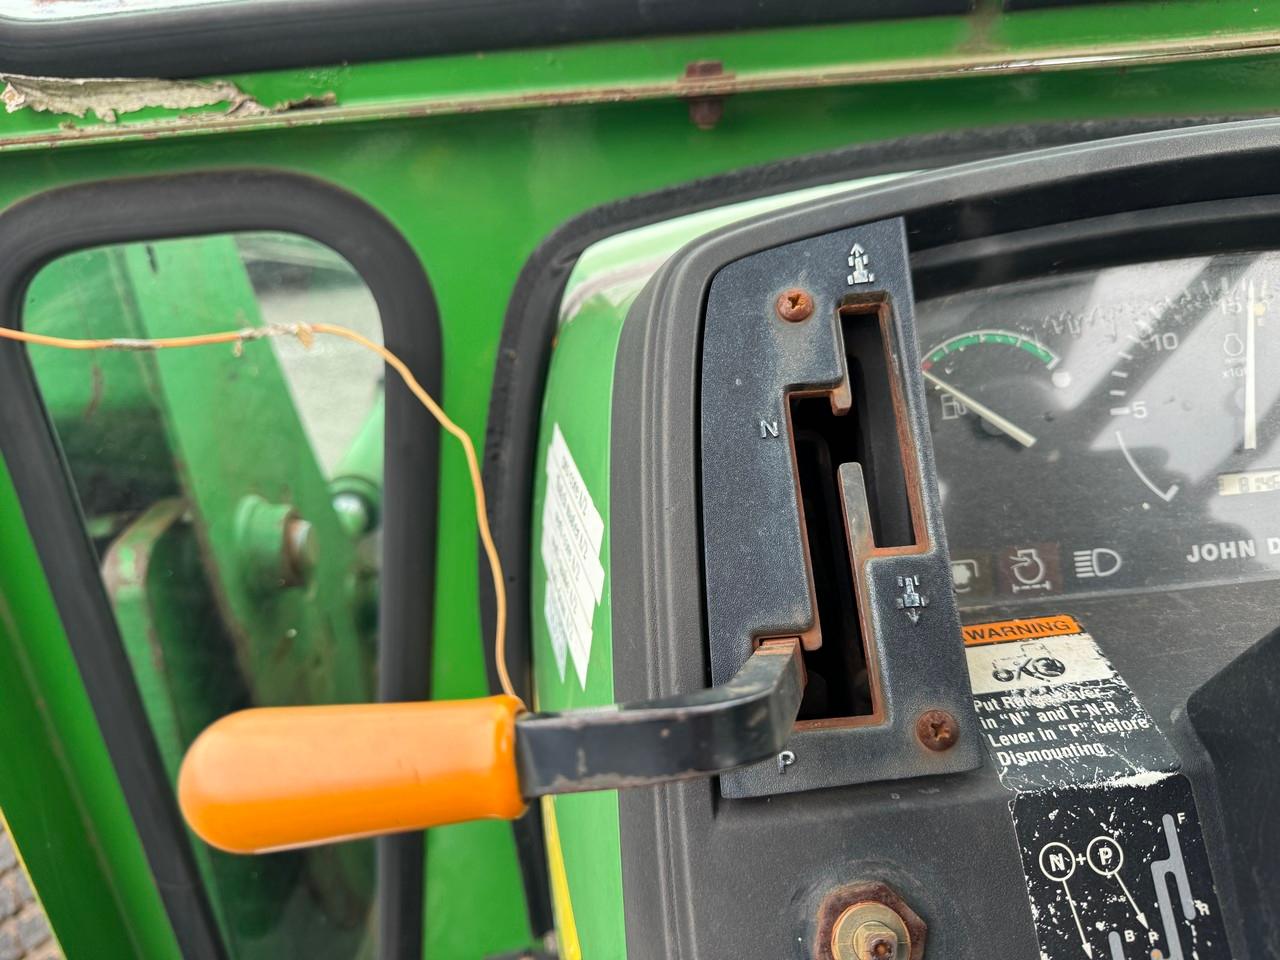 John Deere 5210 Tractor w/ Front Loader Attatchment